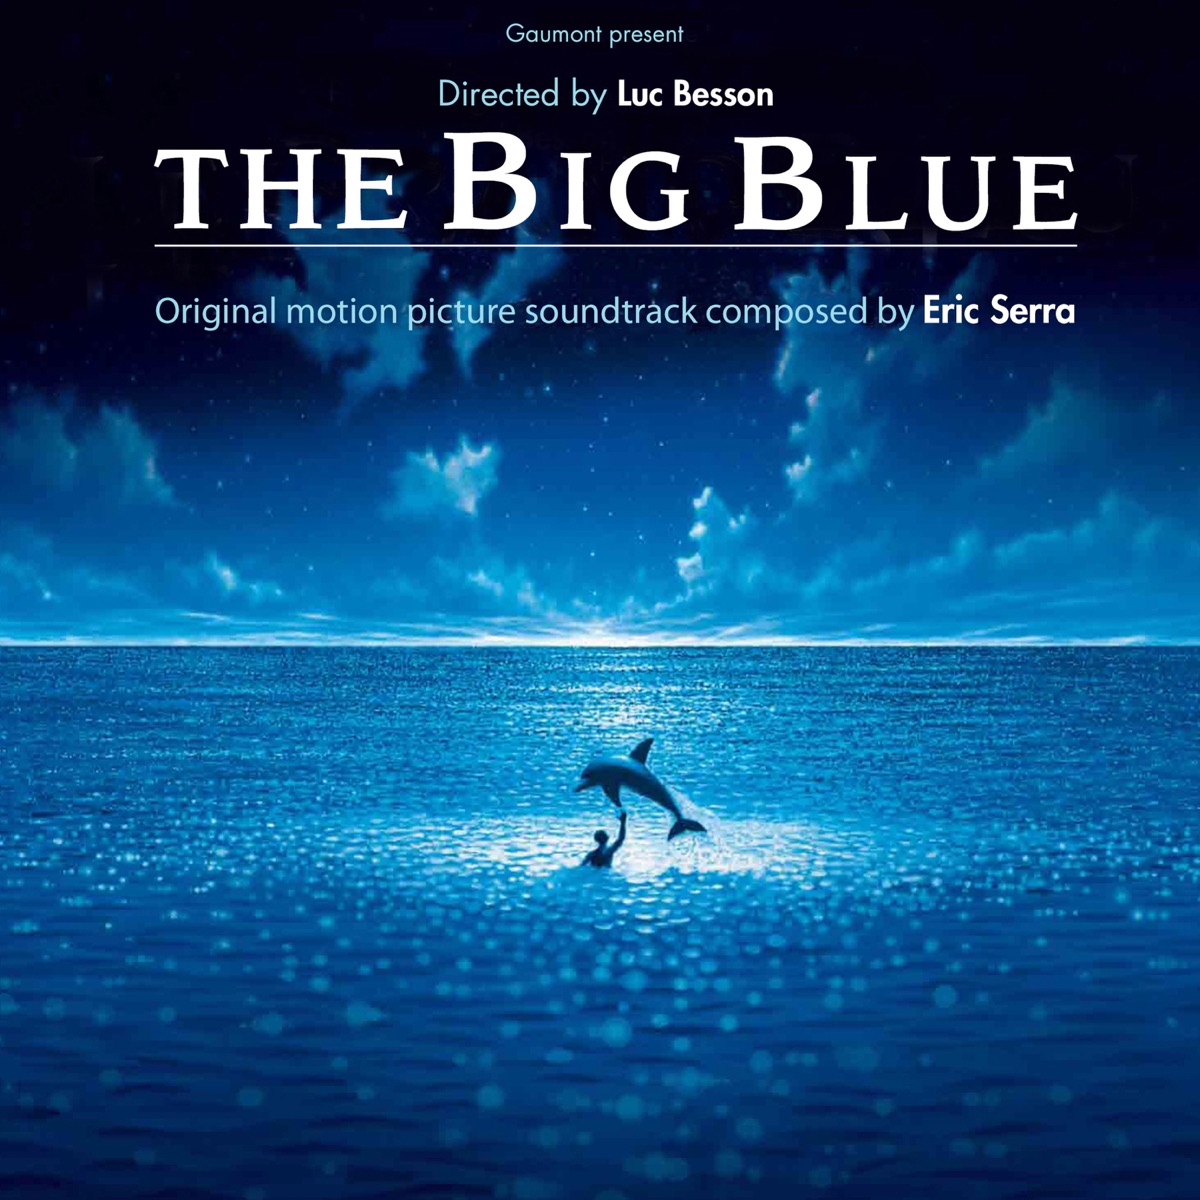 Le Grand Bleu – Album par Eric Serra – Apple Music